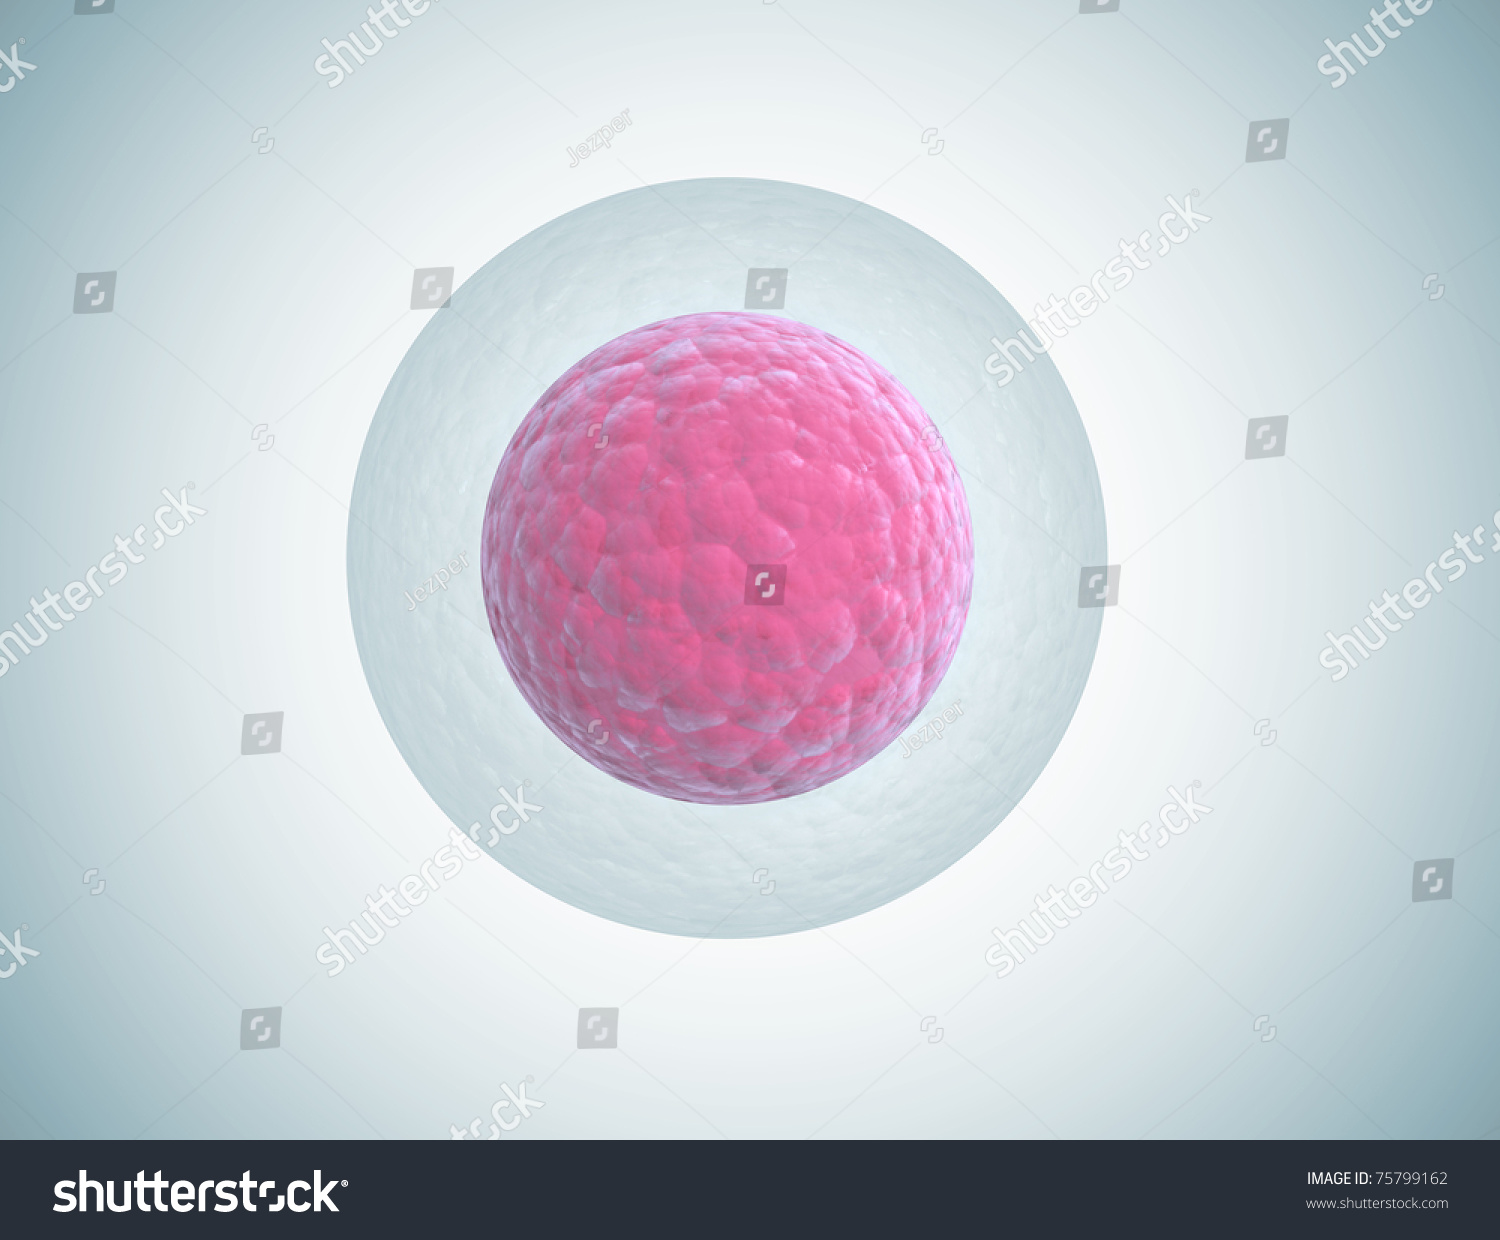 Human Embryo Cell Illustration Stock Illustration 75799162 | Shutterstock